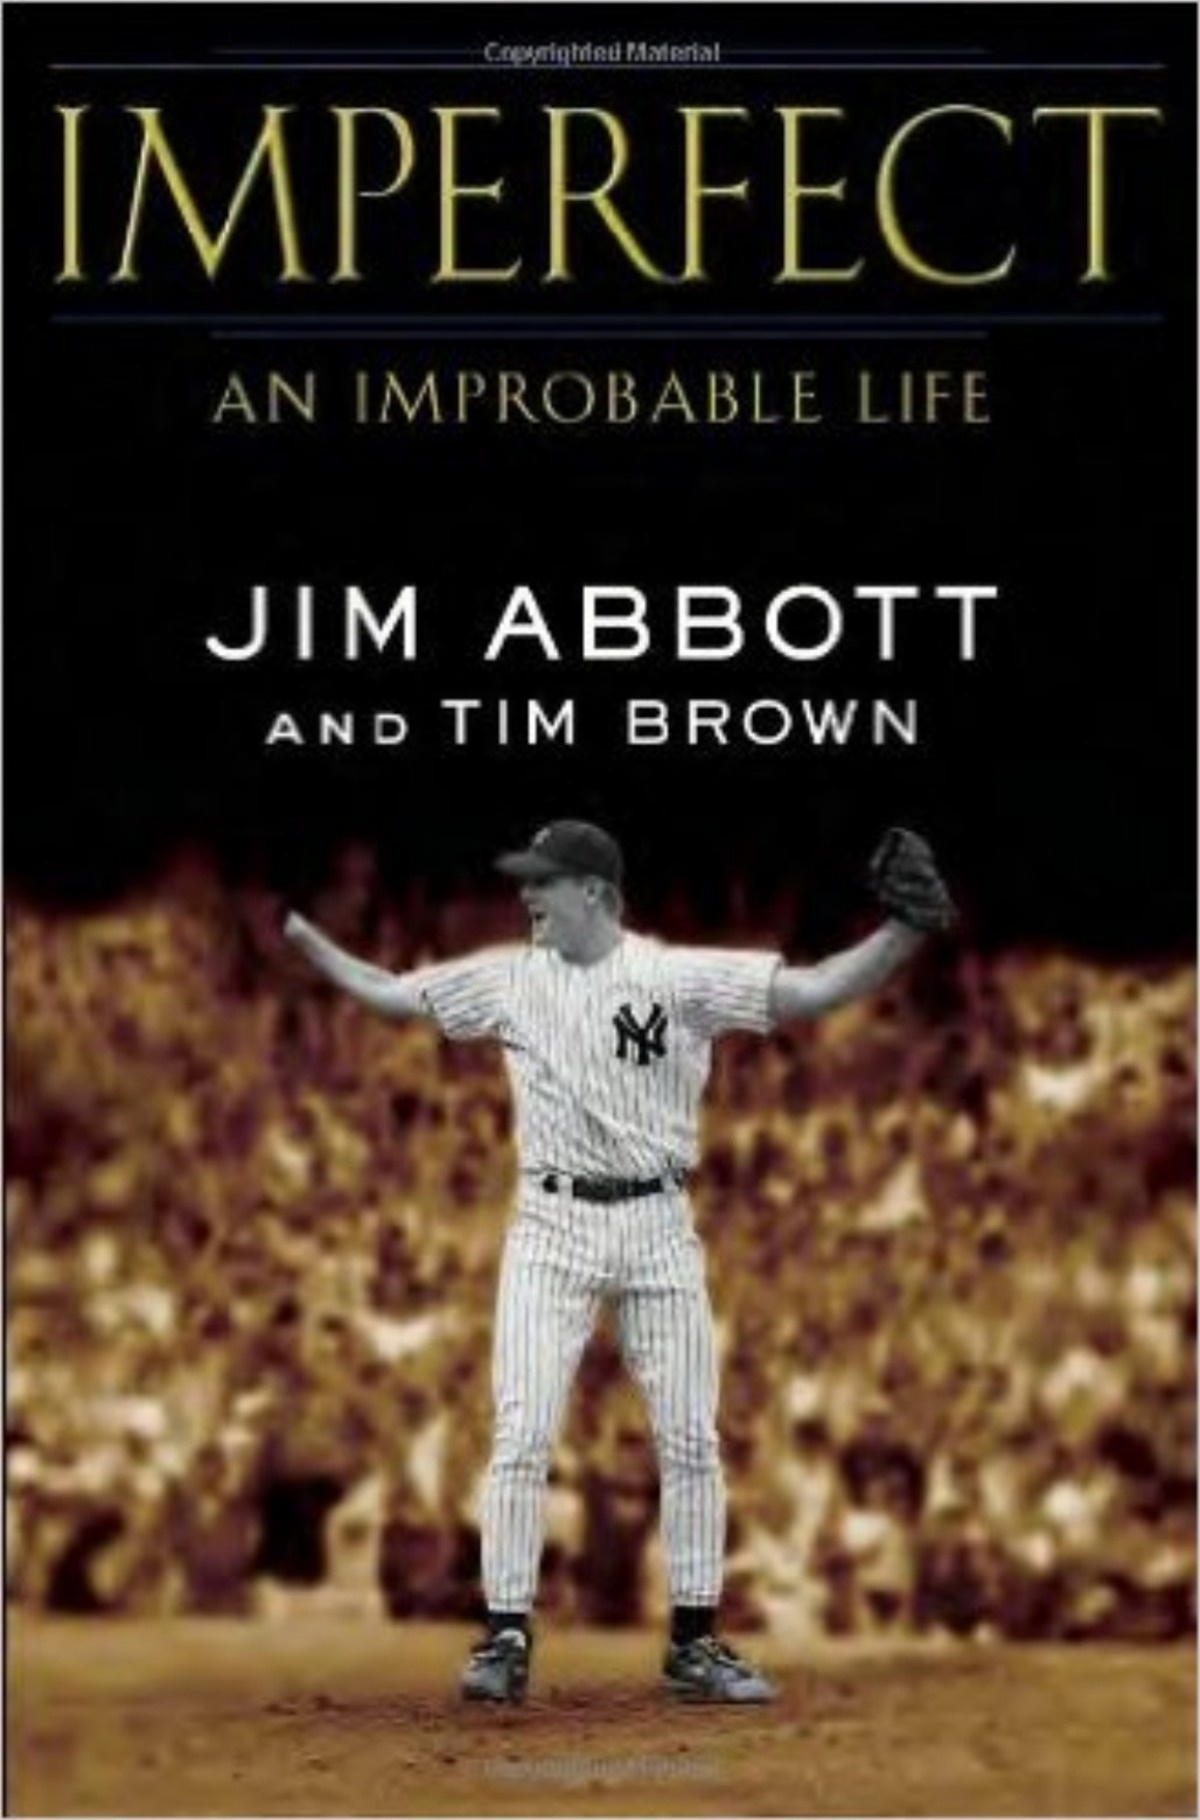 Jim Abbott Speaker, One Hand Baseball Player, Booking Agent